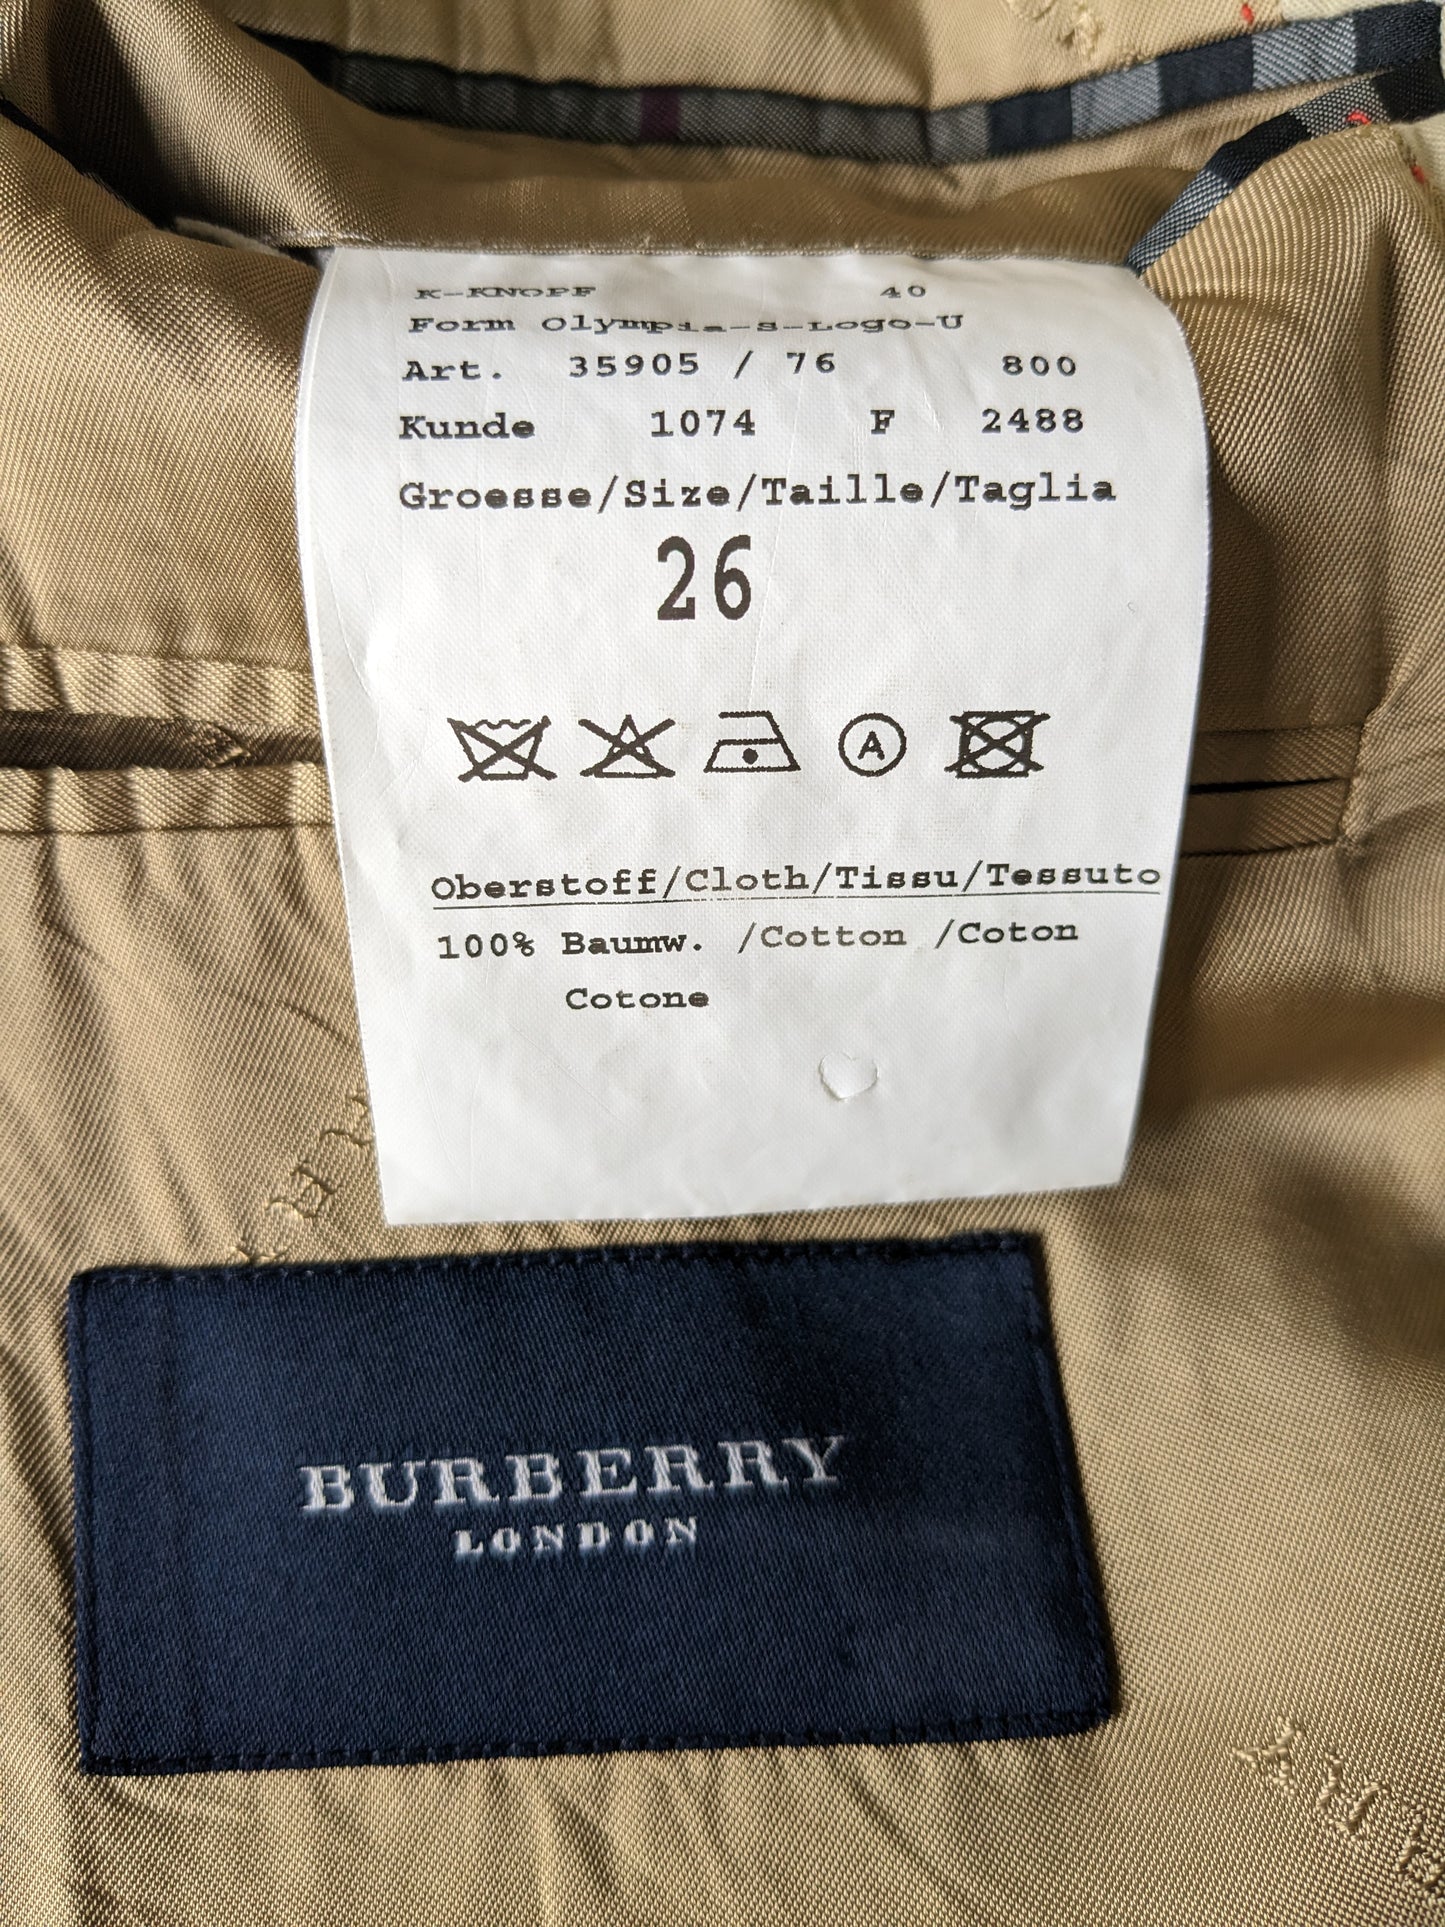 Burberry London Chaqueta de algodón. Color beige. Tamaño 26 (52 / L)